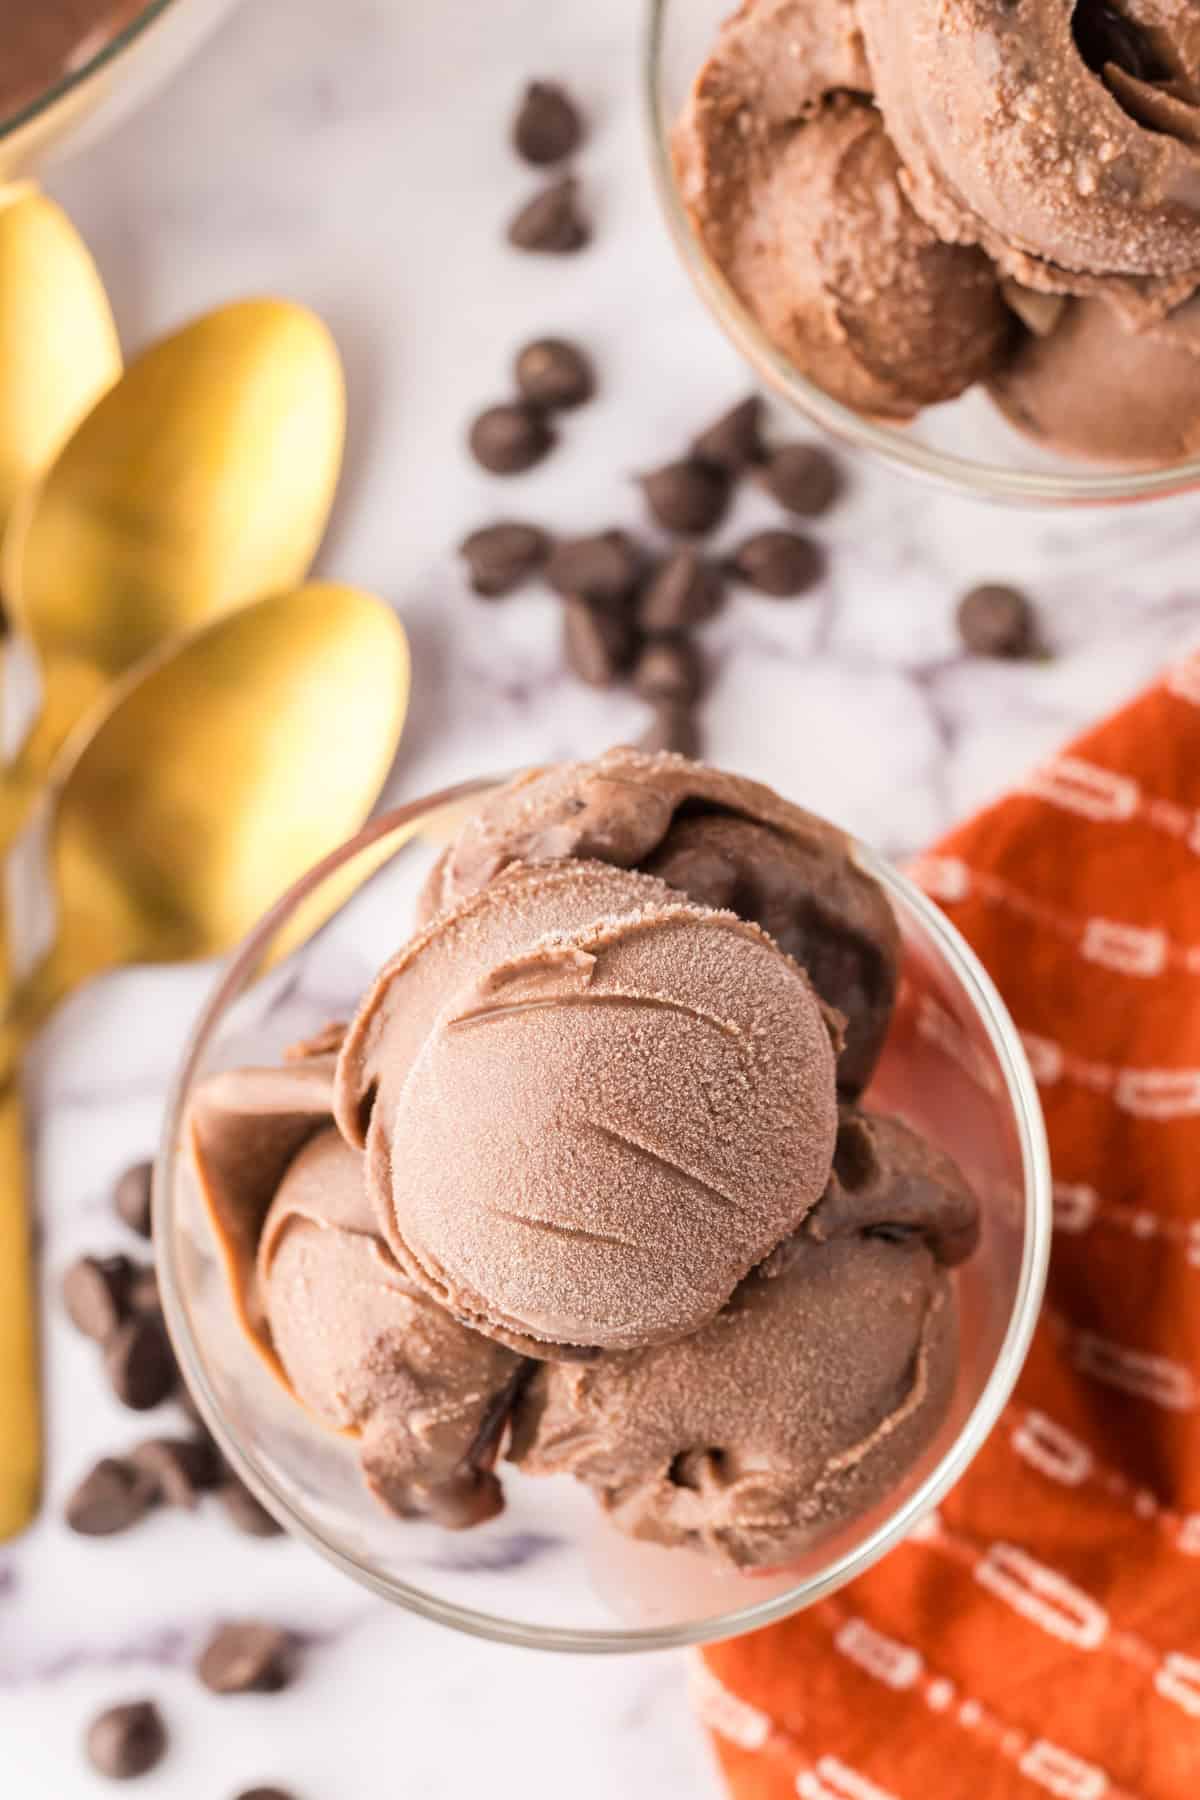 chocolate truffle ice cream scooped into a sundae glass.